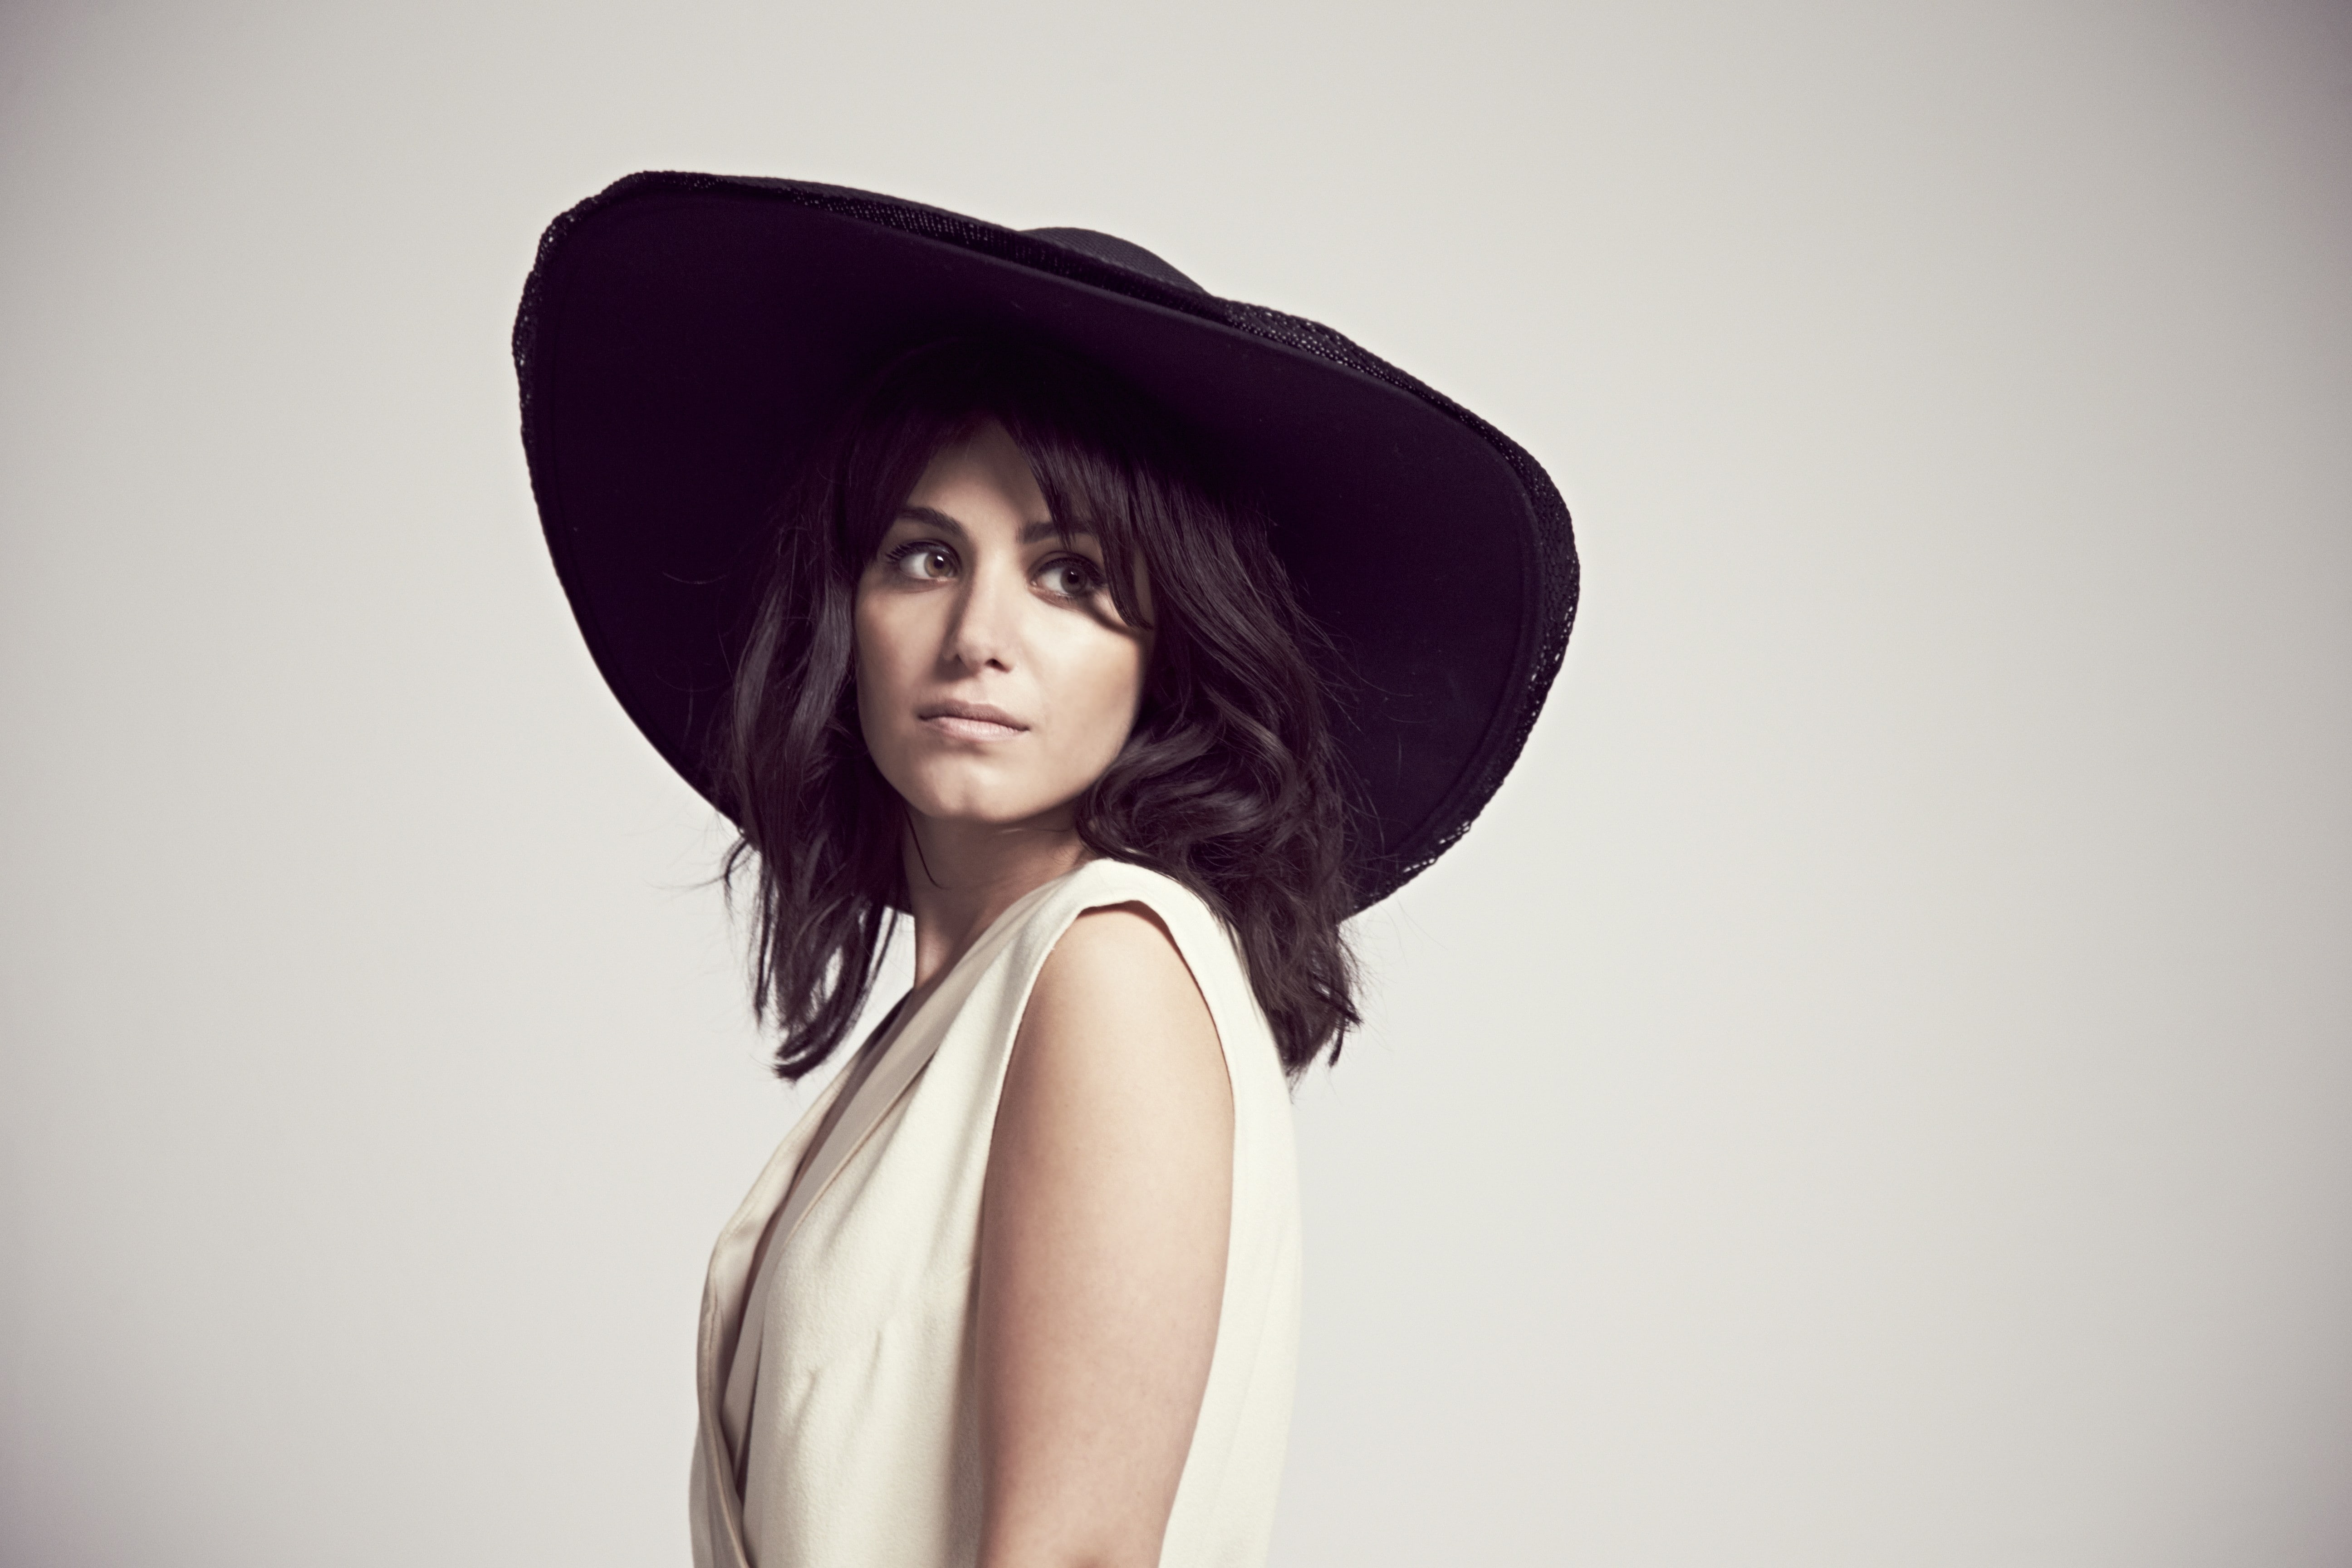 woman in white sleeveless top and black floppy hat, Katie Melua